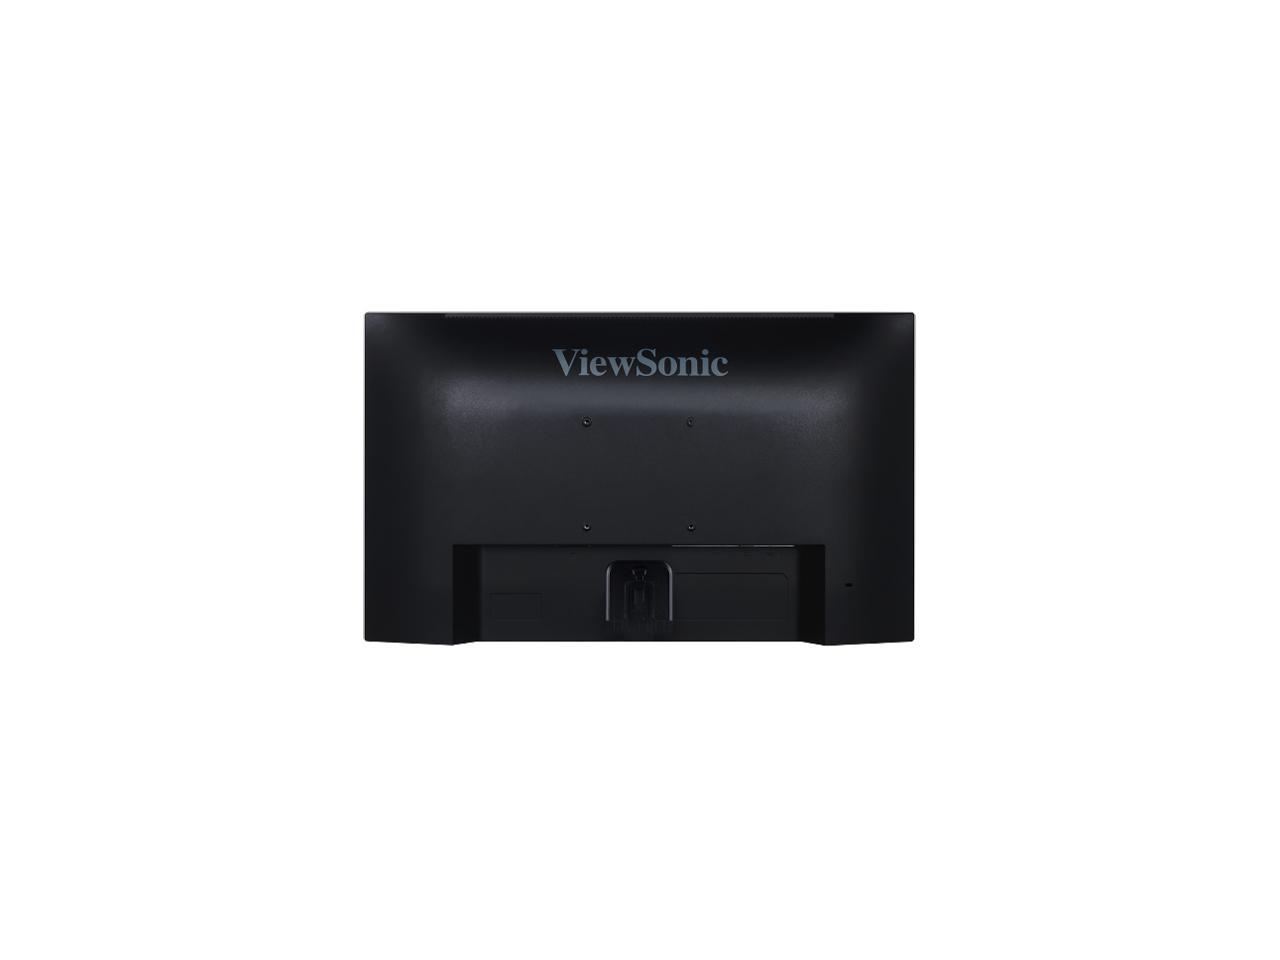 ViewSonic VA2456-mhd_H2 - 24" Full HD 1920 x 1080 5ms (GTG W/OD) VGA HDMI DisplayPort Built-in Speakers Dual Pack Anti-Glare Backlit LED IPS Monitor